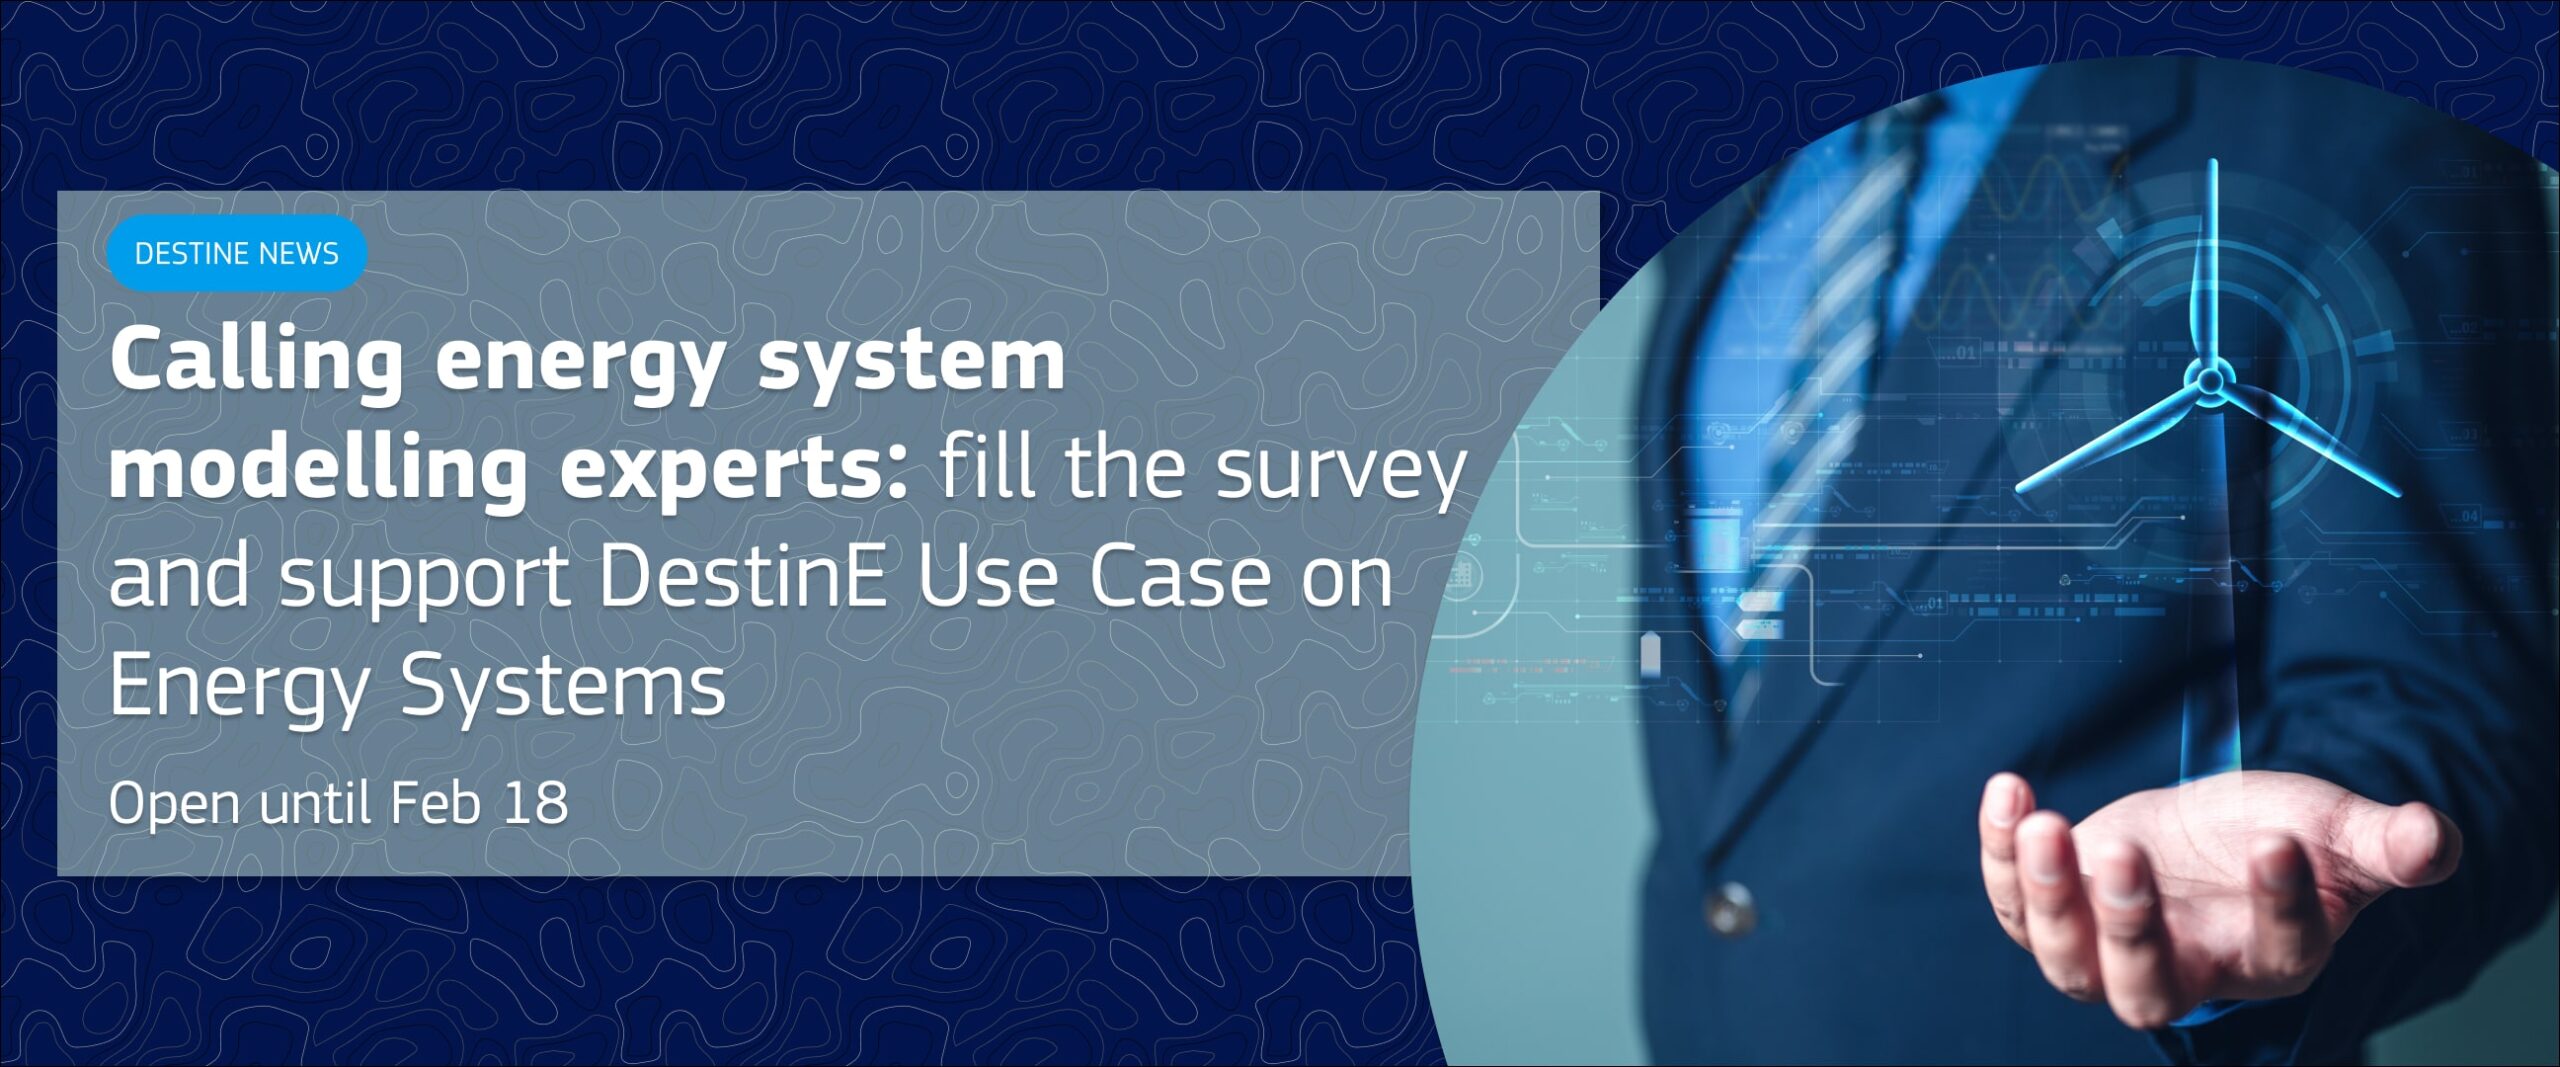 Survey DestinE Use Case on Energy Systems